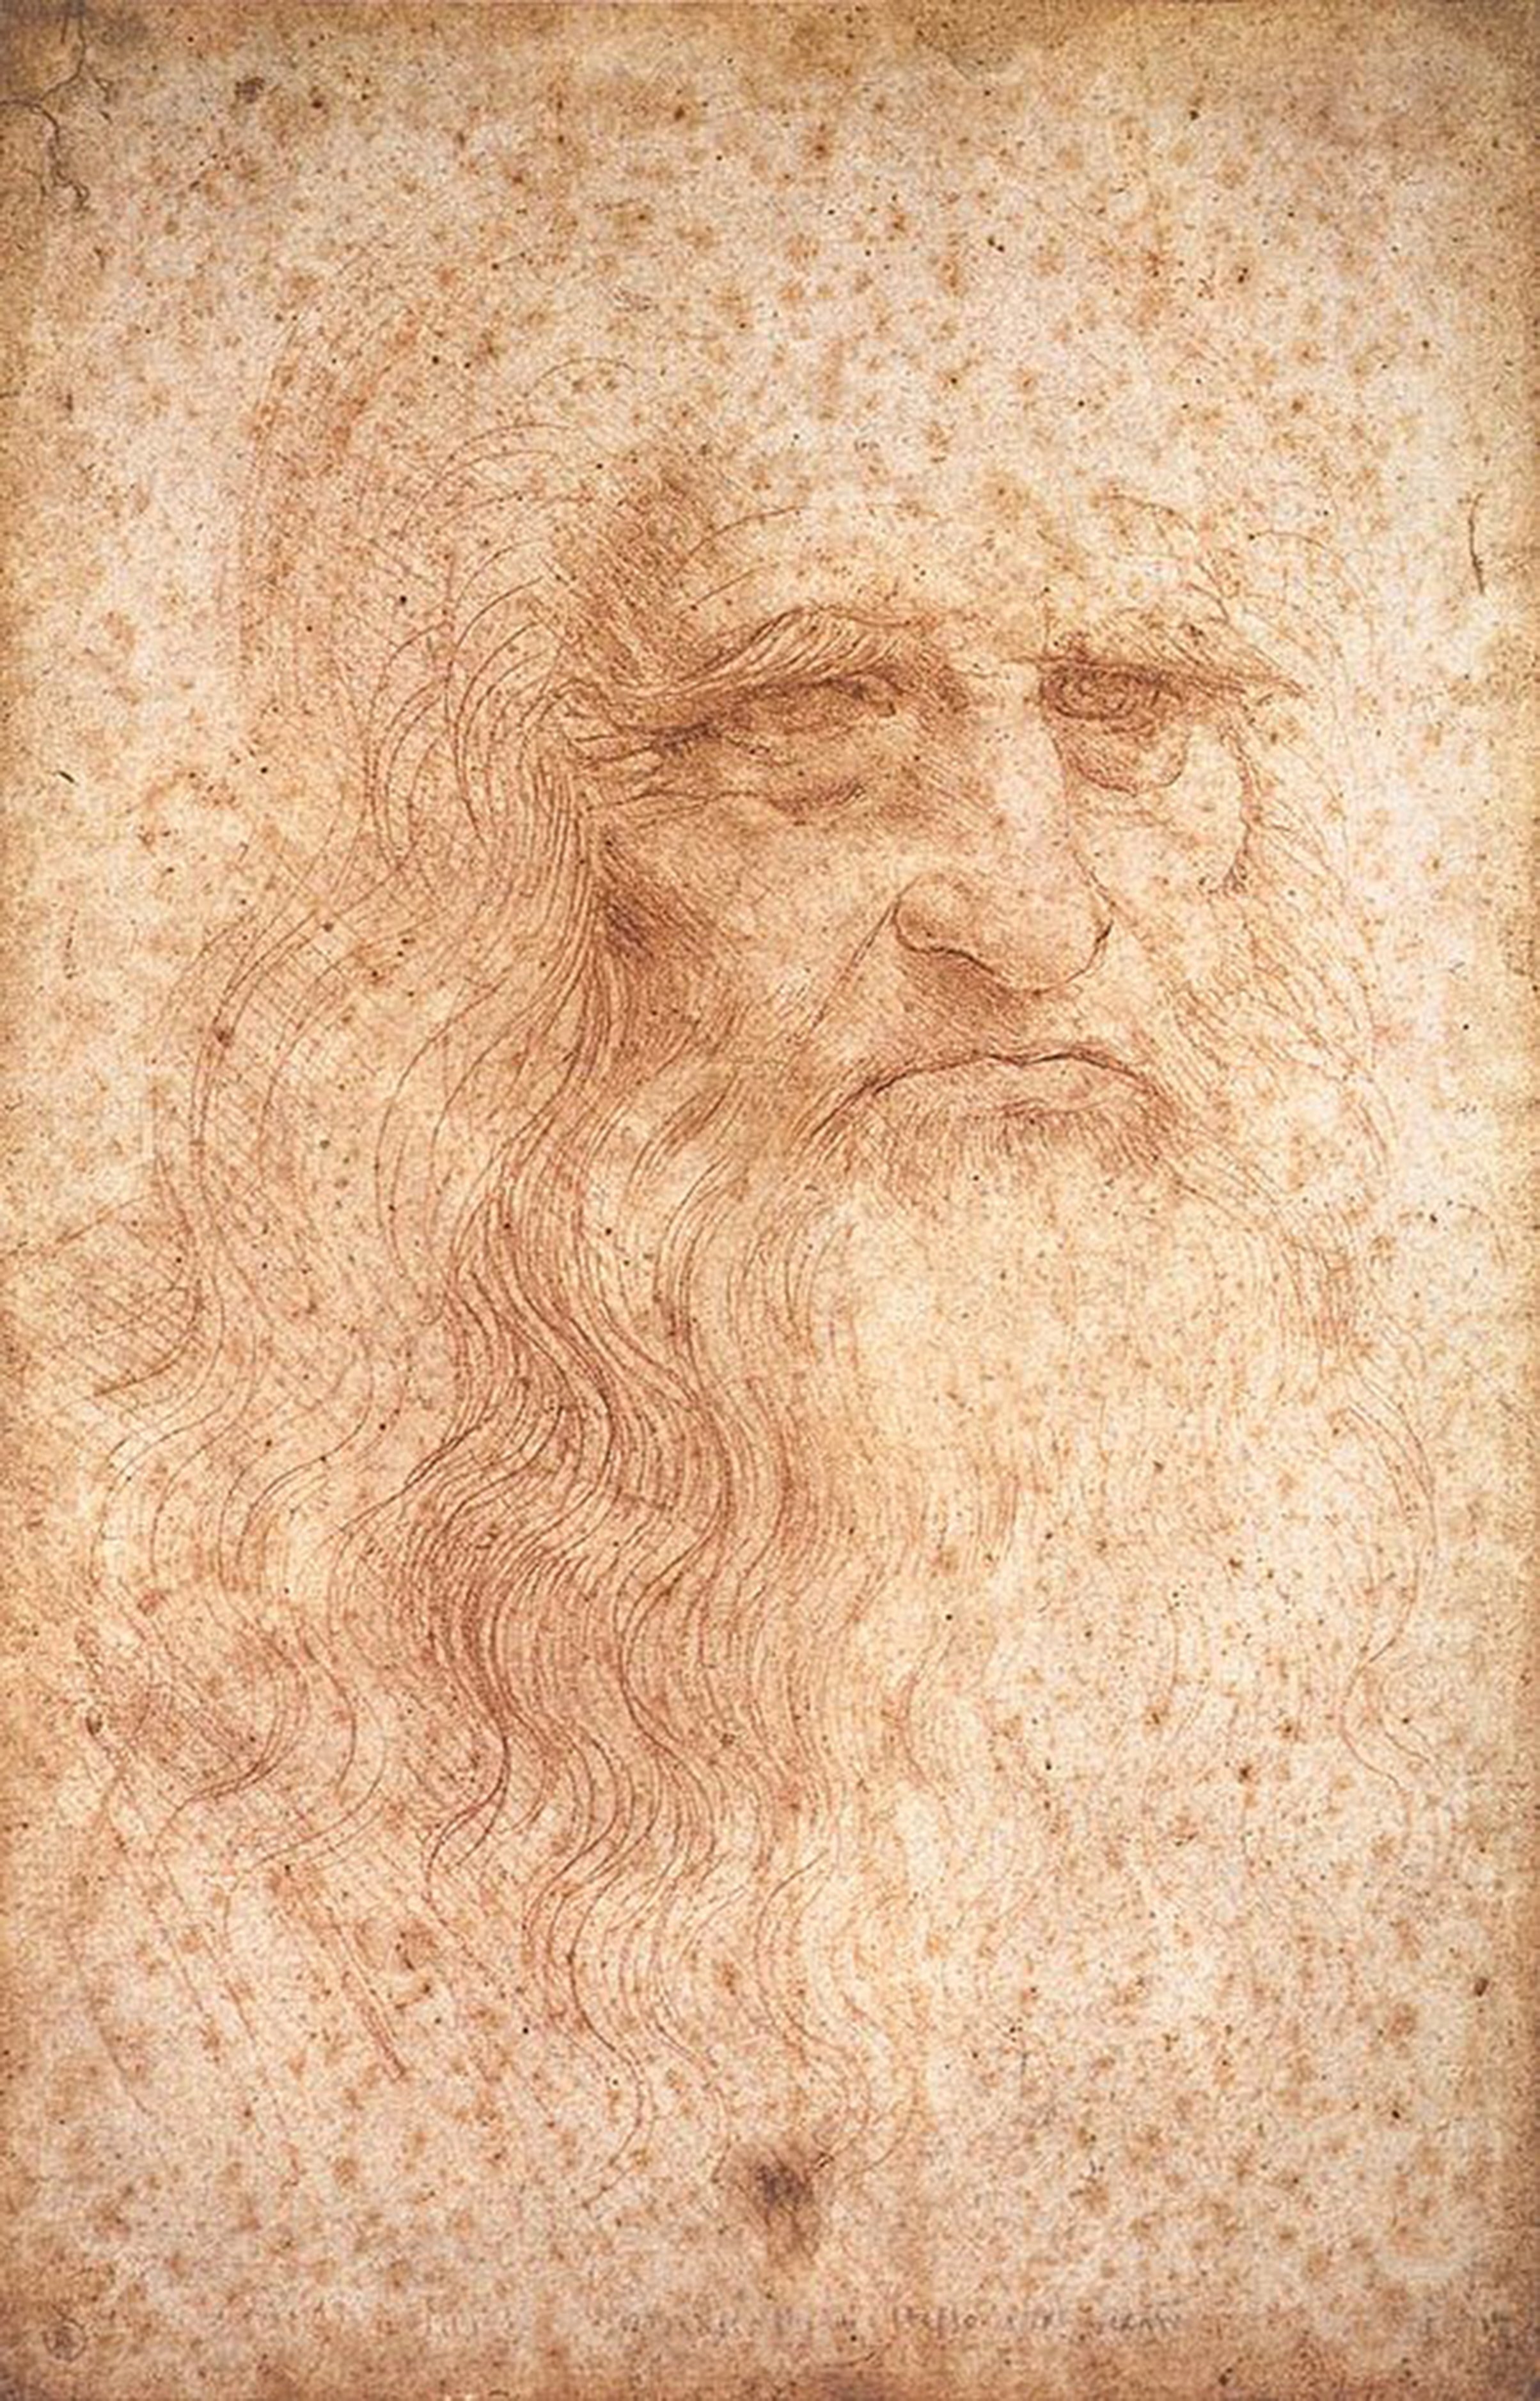 Leonardo_da_Vinci_-_presumed_self-portrait_-_WGA12798.jpg